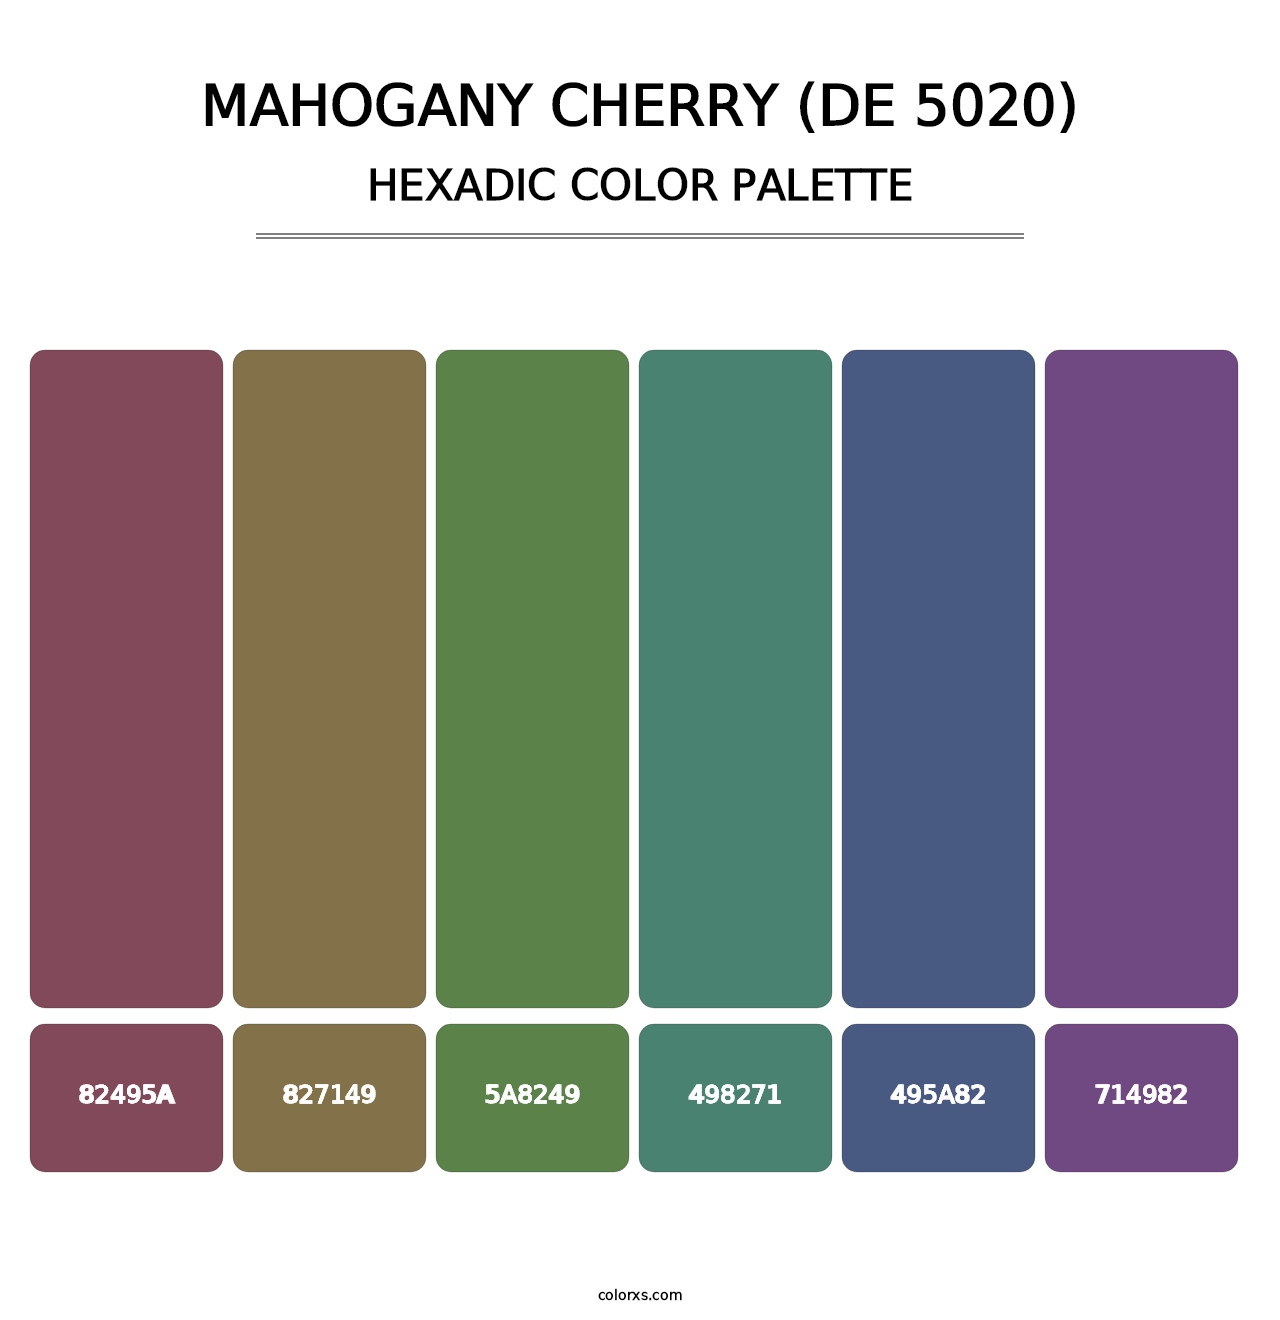 Mahogany Cherry (DE 5020) - Hexadic Color Palette